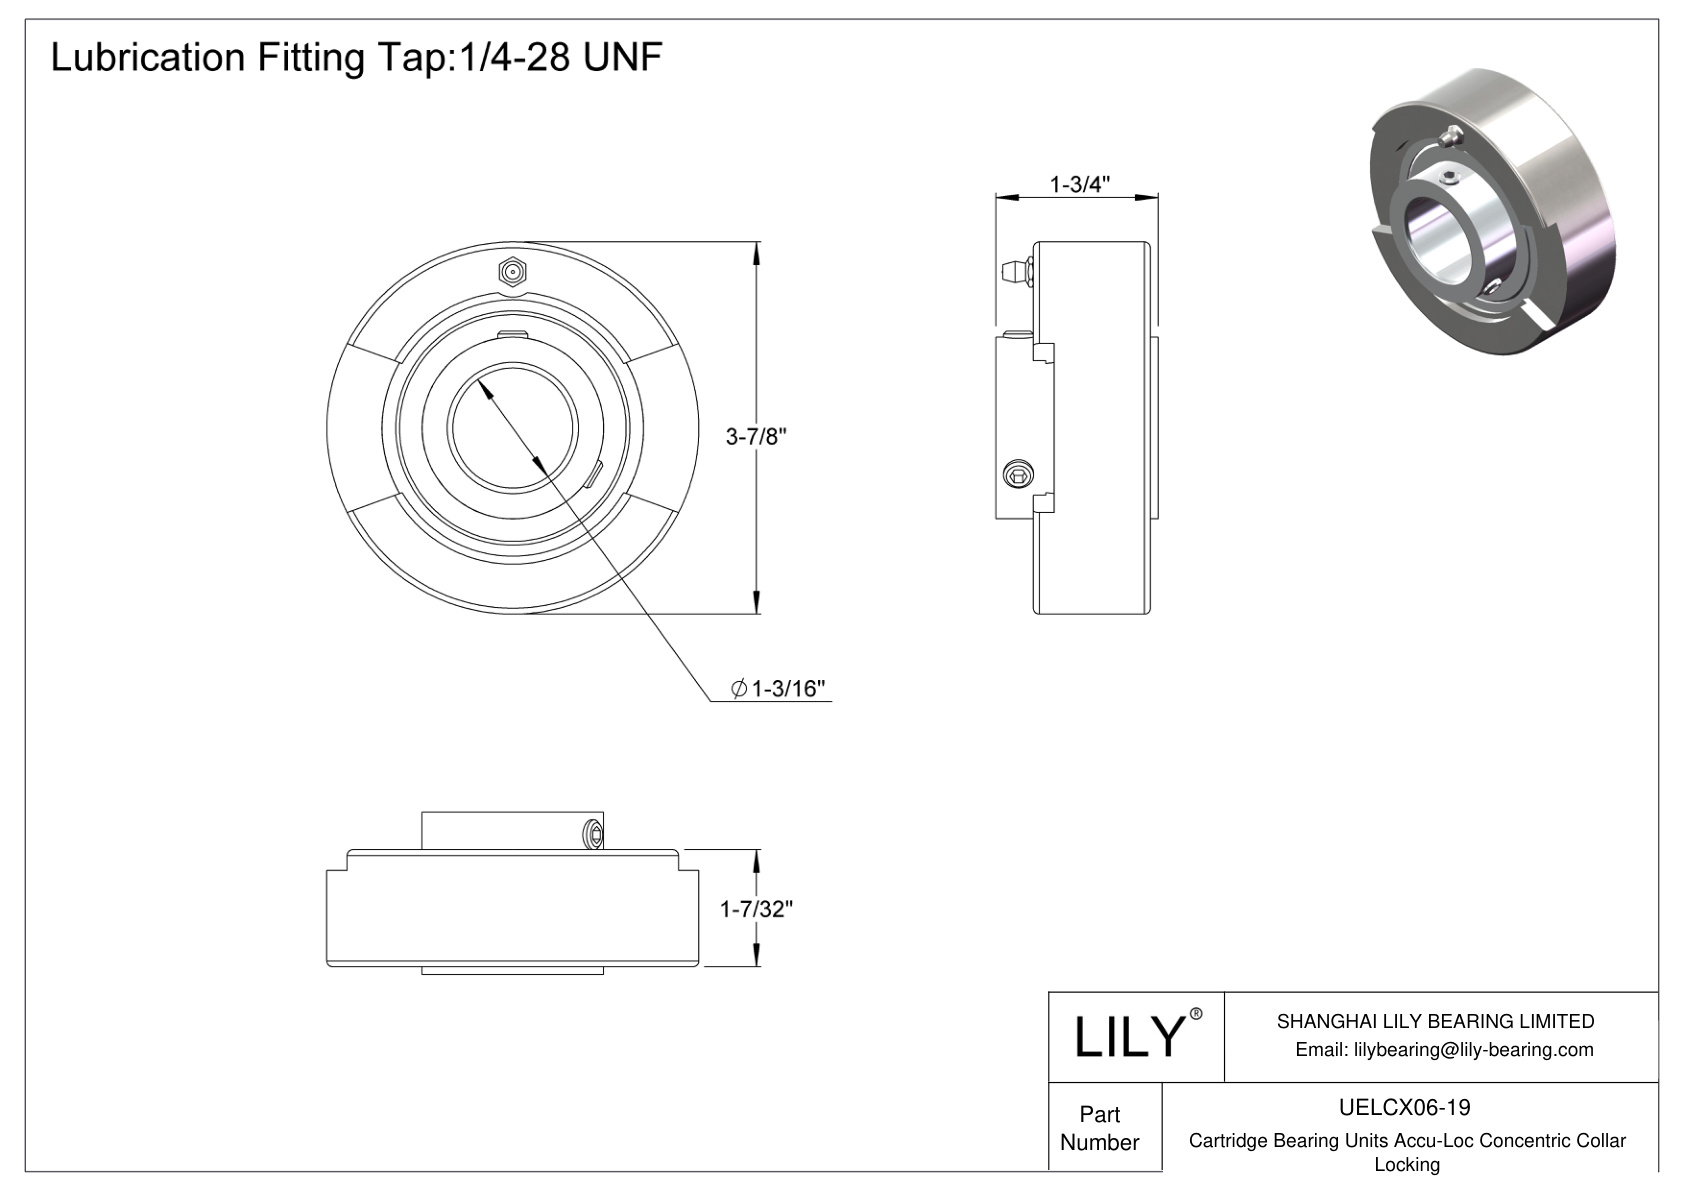 UELCX06-19 Cartridge Bearing Units Accu-Loc Concentric Collar Locking cad drawing